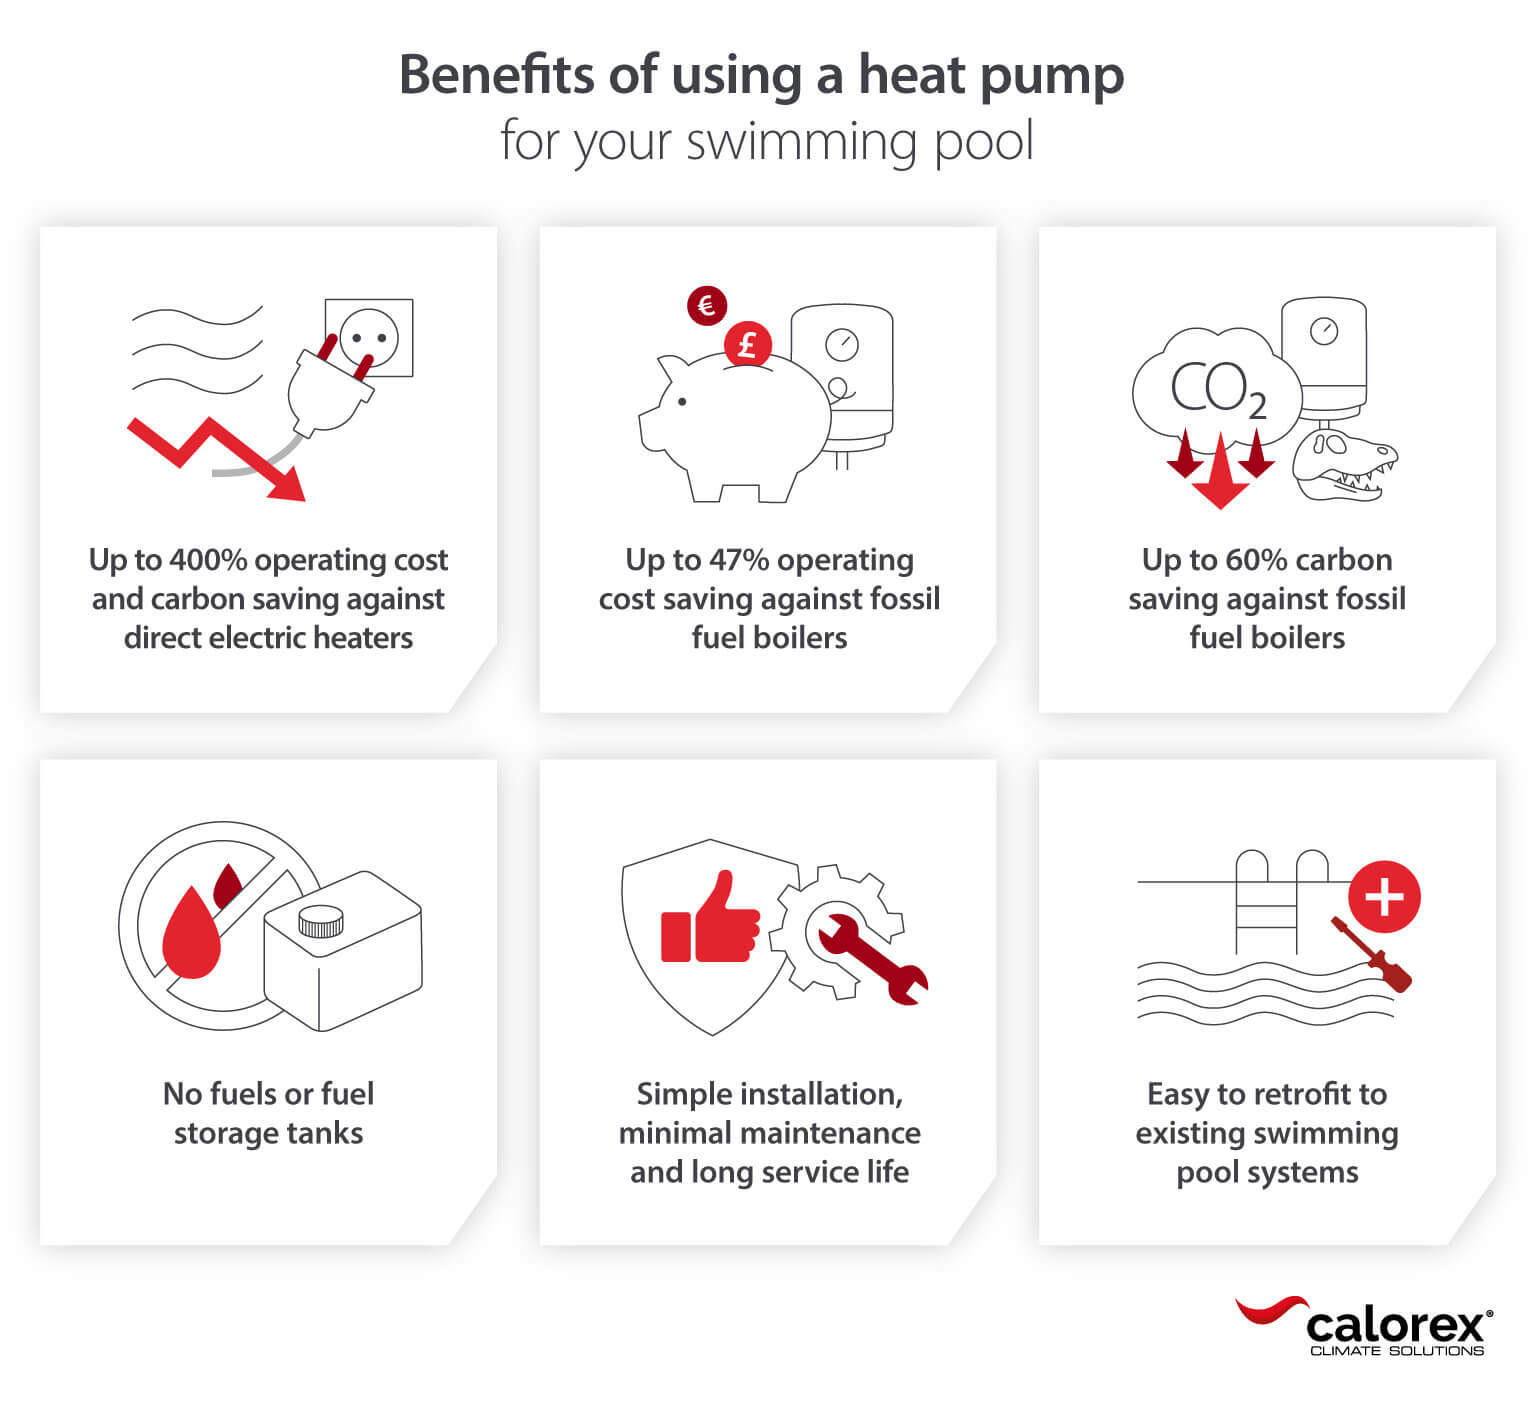 Benefits of using a swimming pool heat pump - Calorex infographic